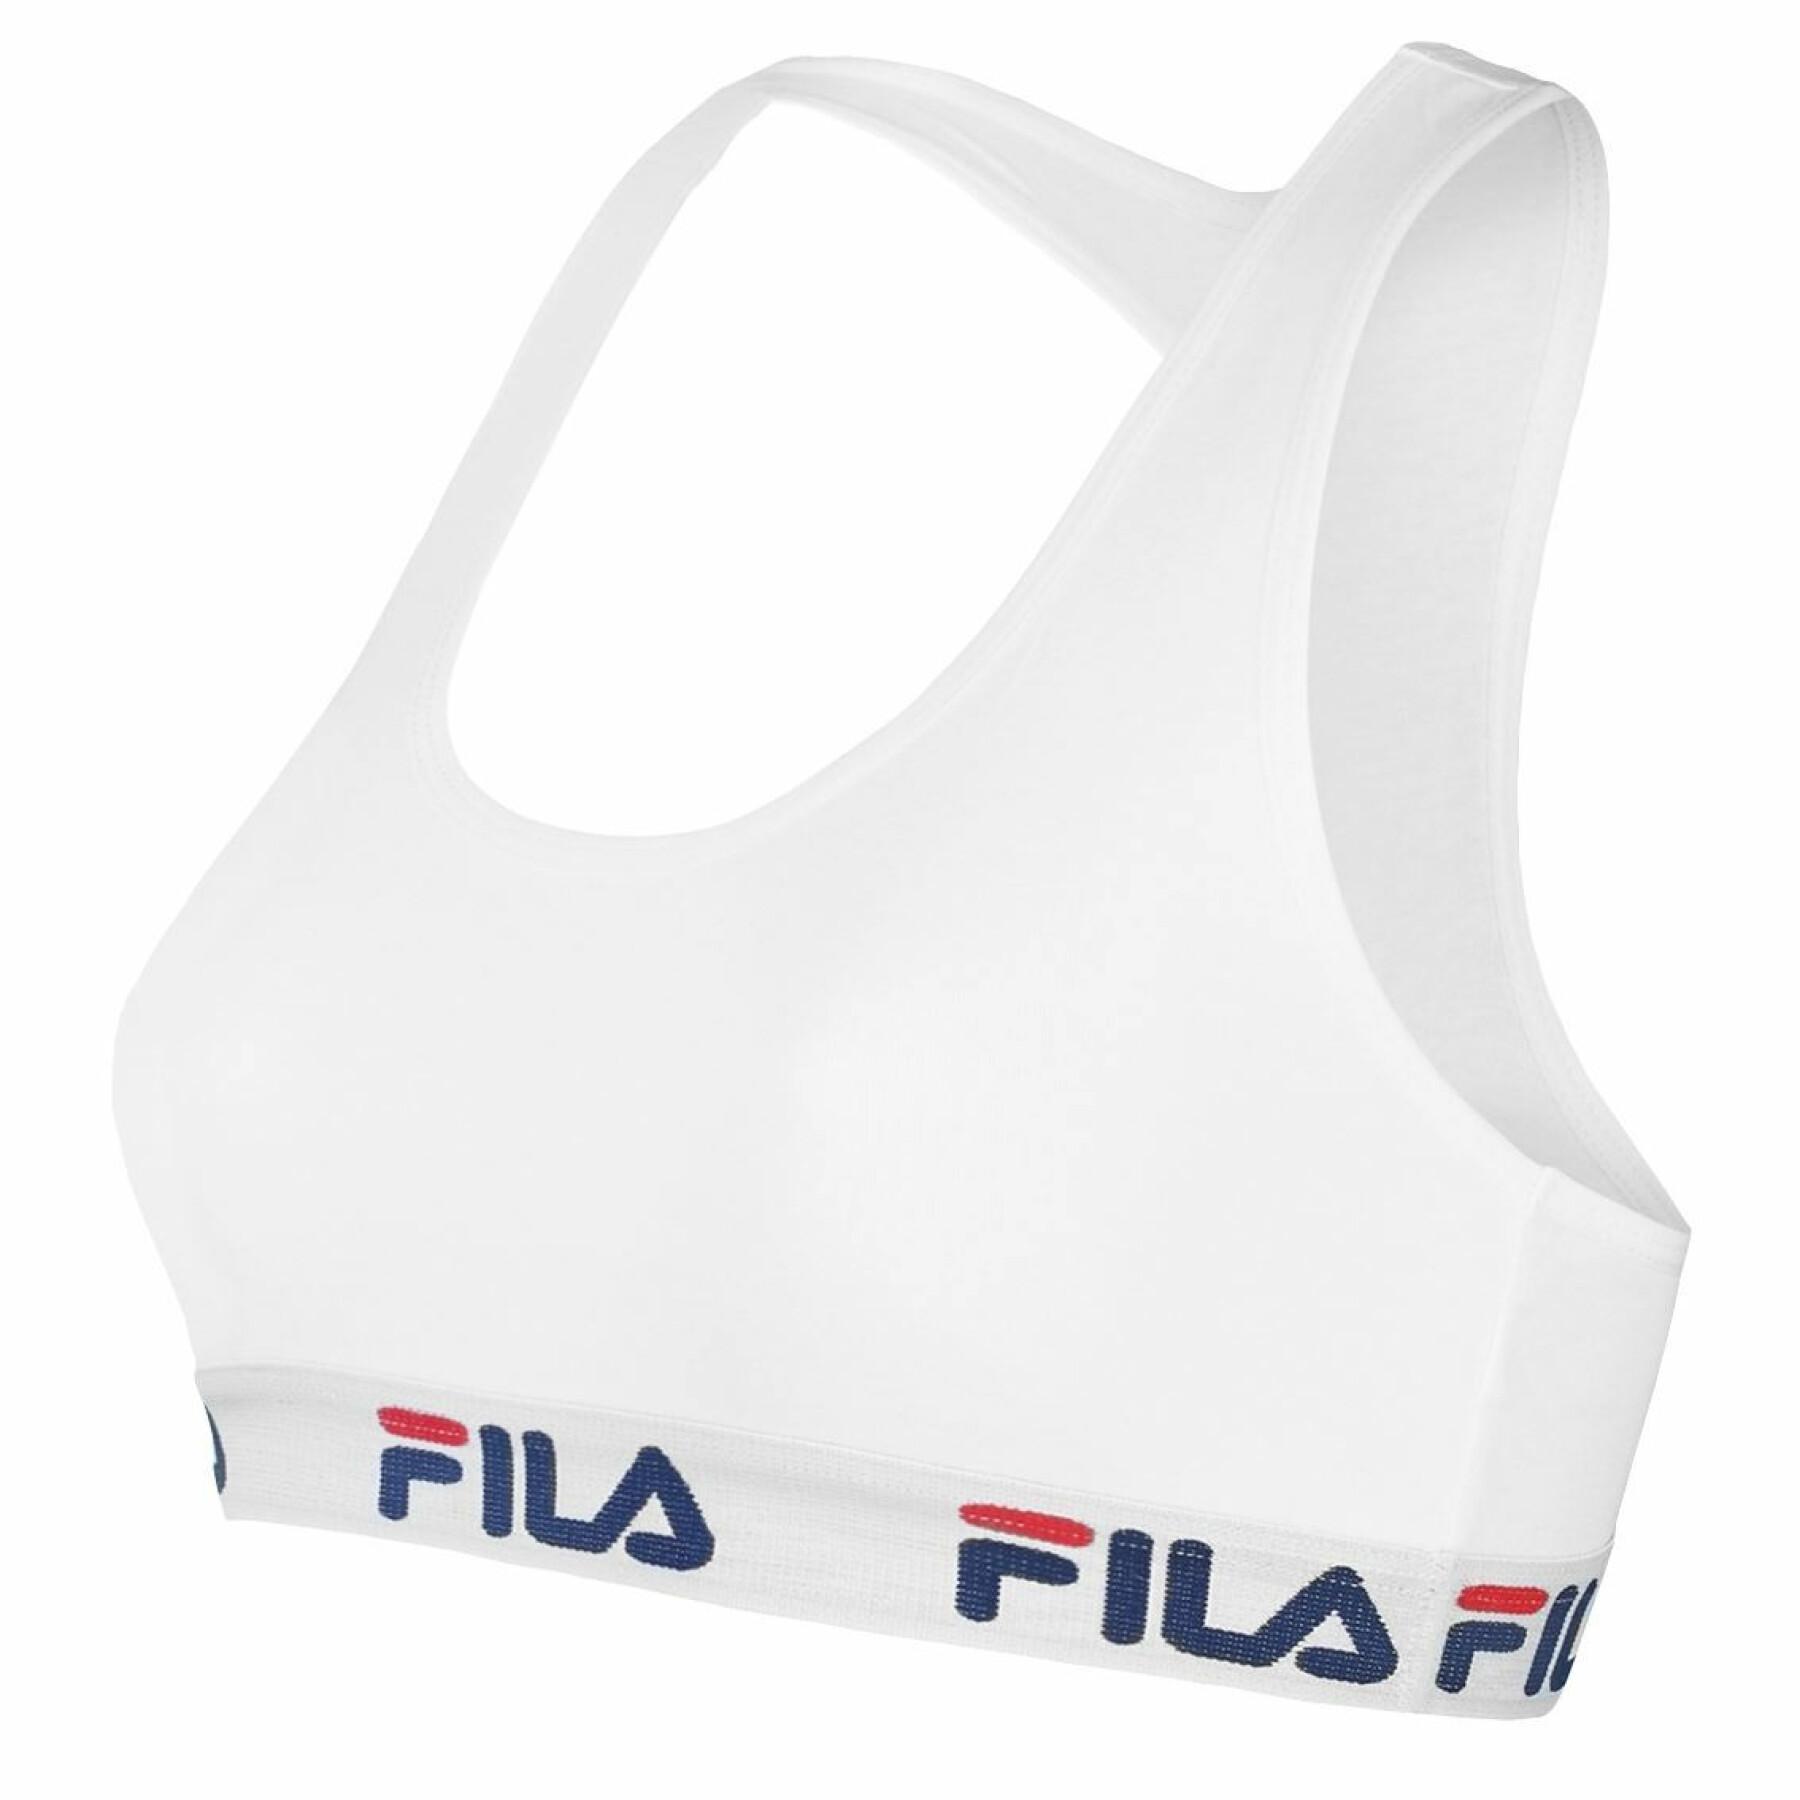 Women's cotton bra Fila - Brands - Lifestyle